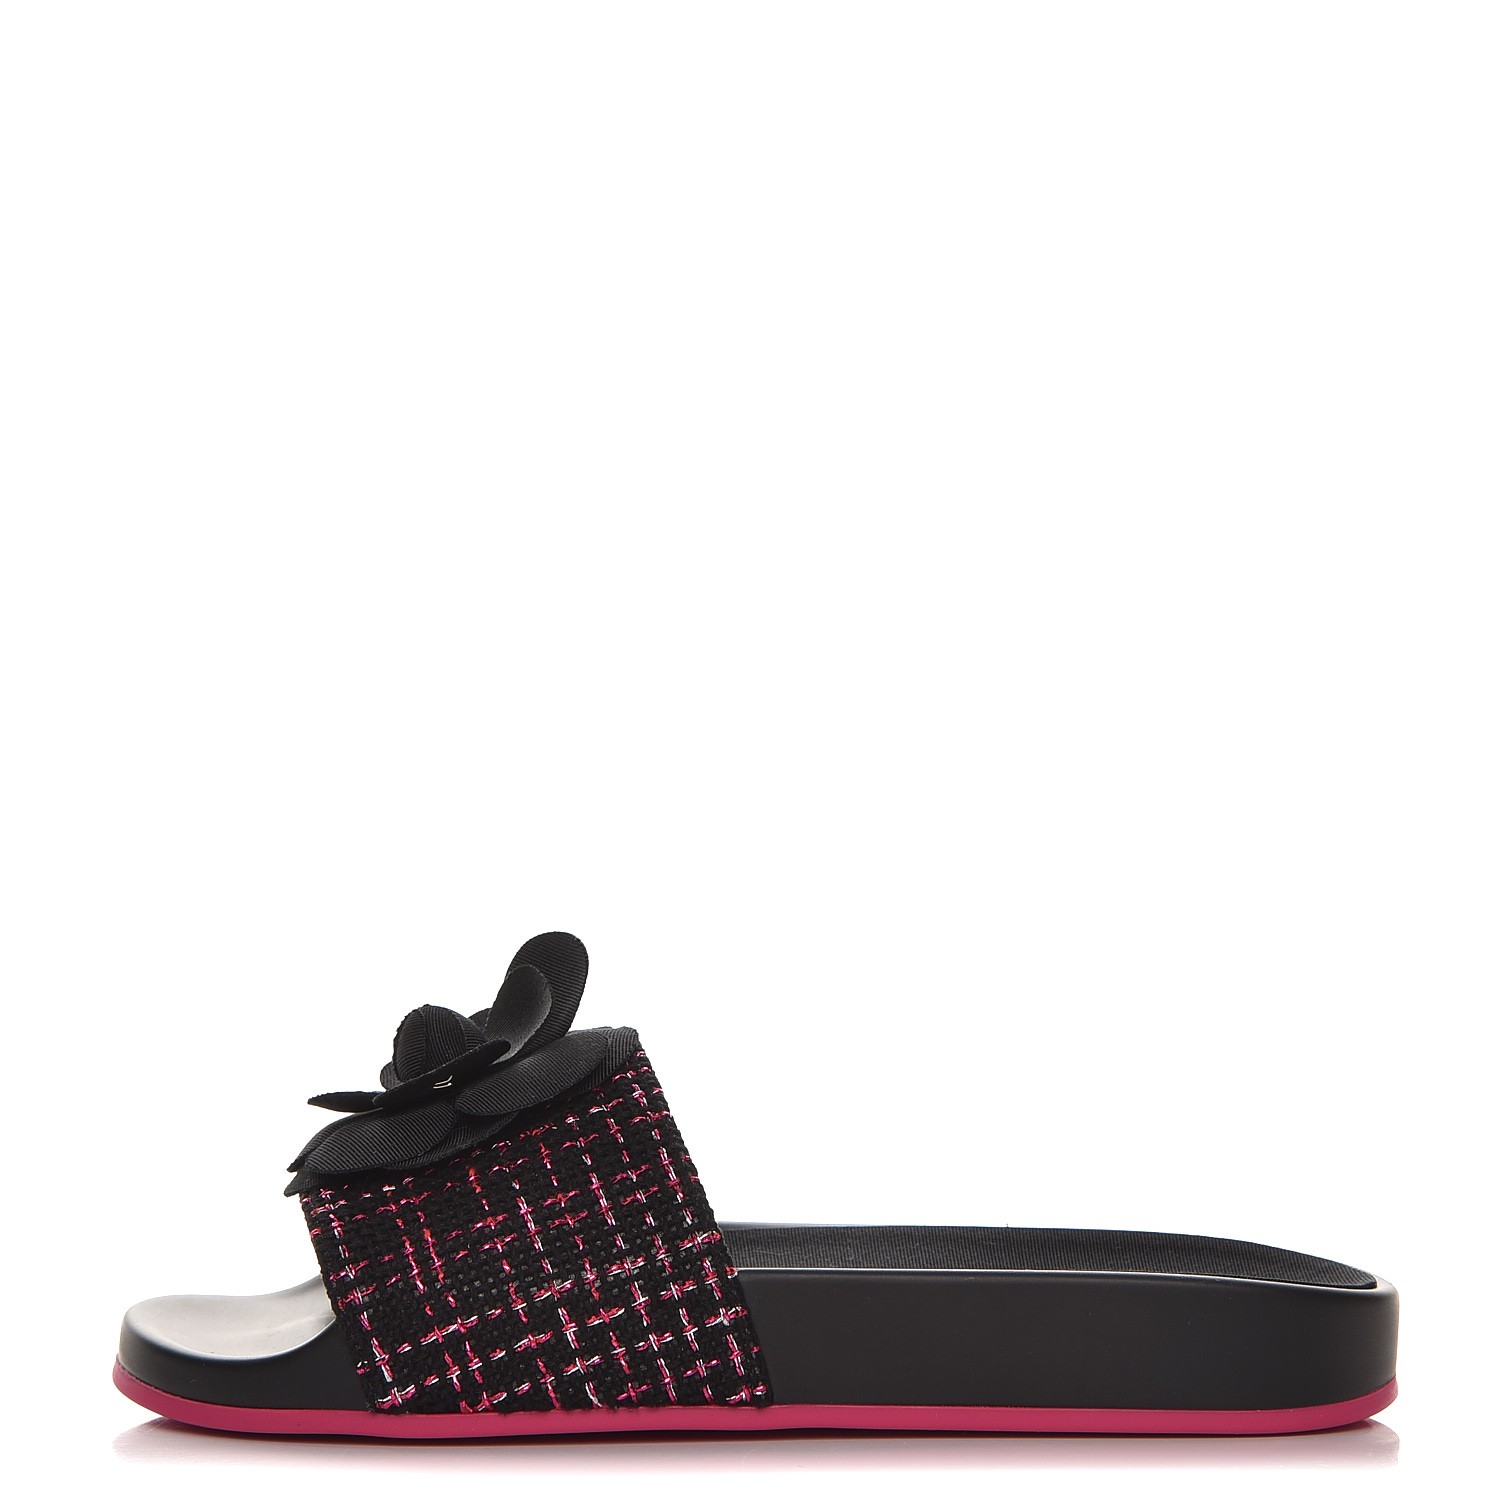 CHANEL Tweed Grosgrain Camellia Flat Sandals 35 Black Pink 225097